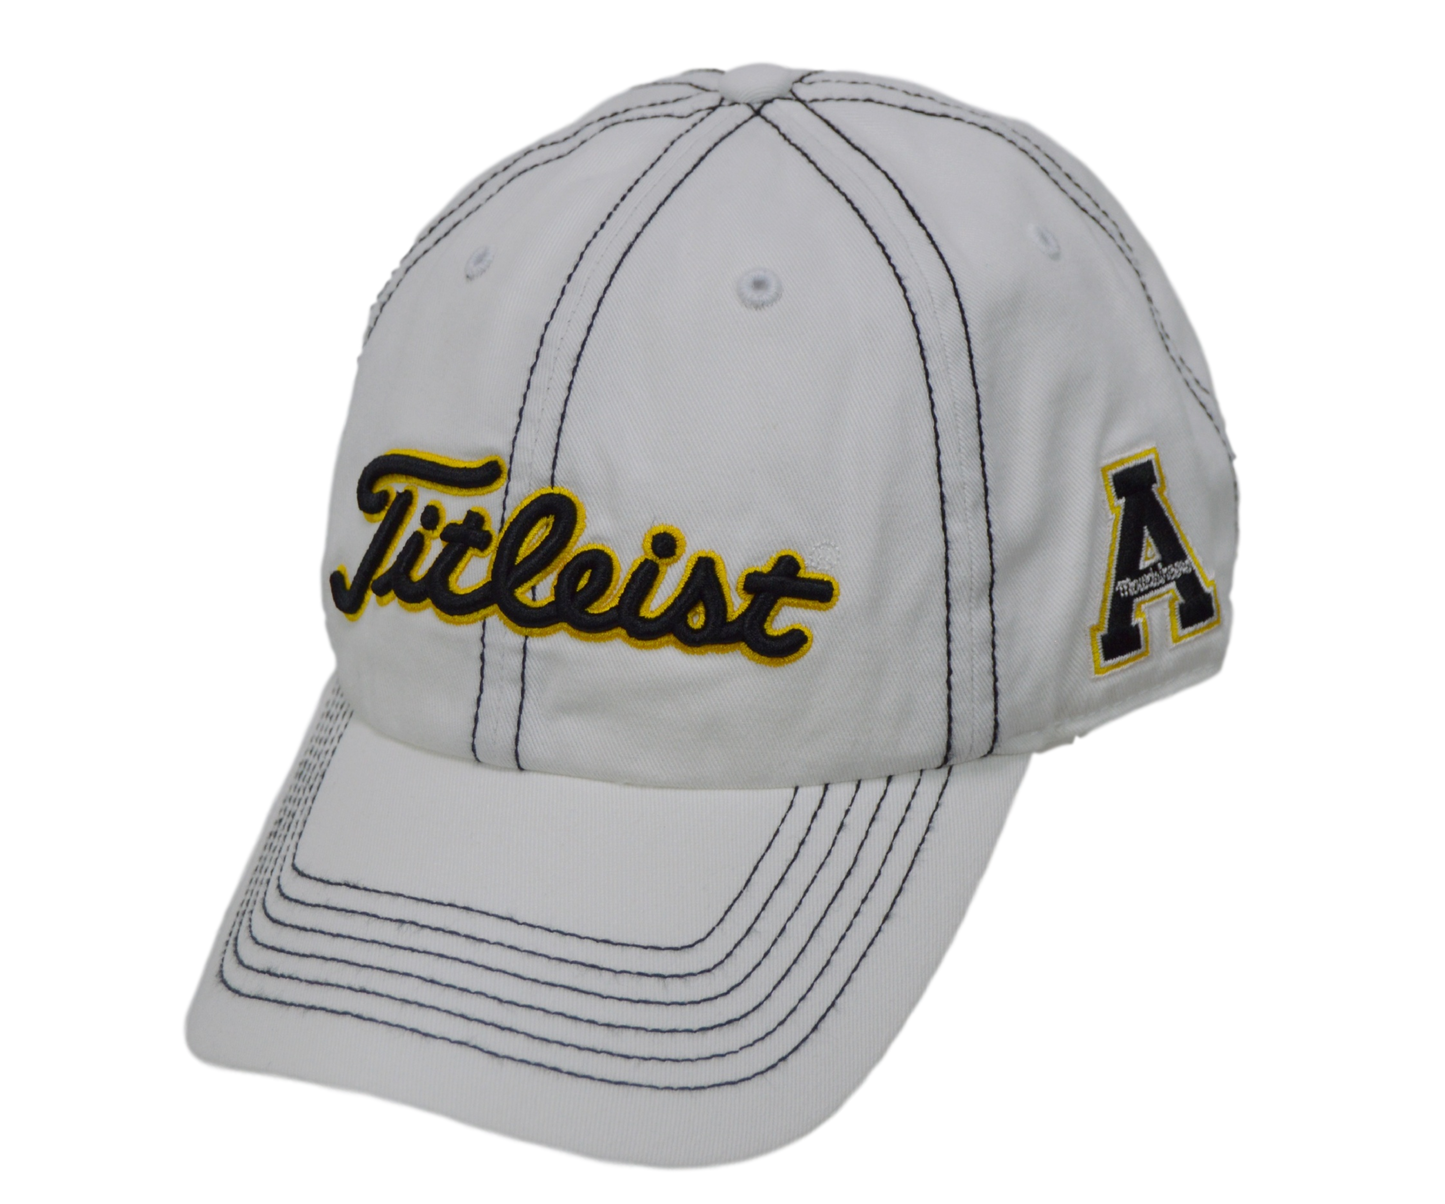 Titleist Golf Hat - Appalachian State 3 logo - White/Adjustable